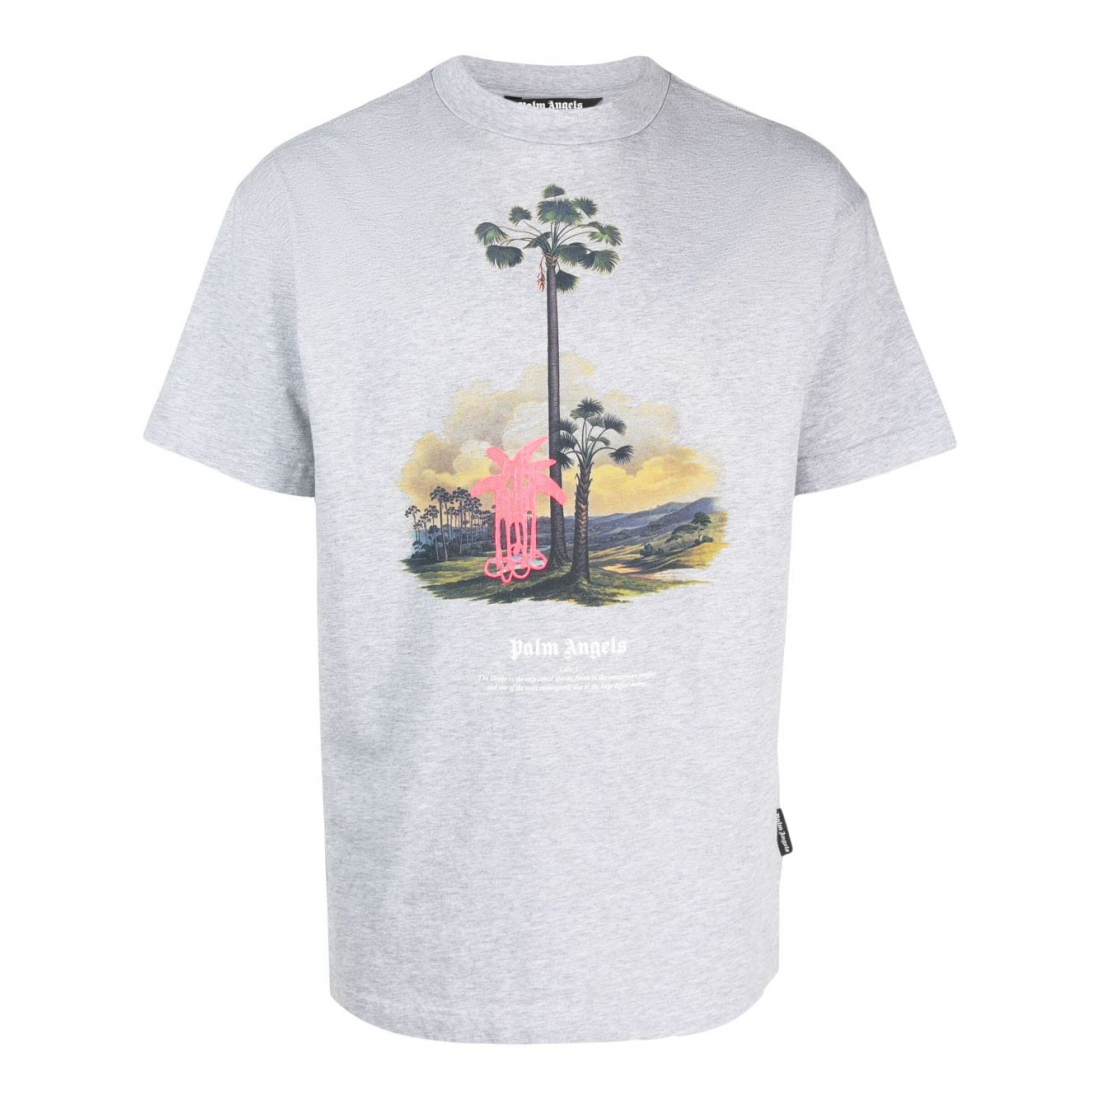 Men's 'Palm Tree' T-Shirt